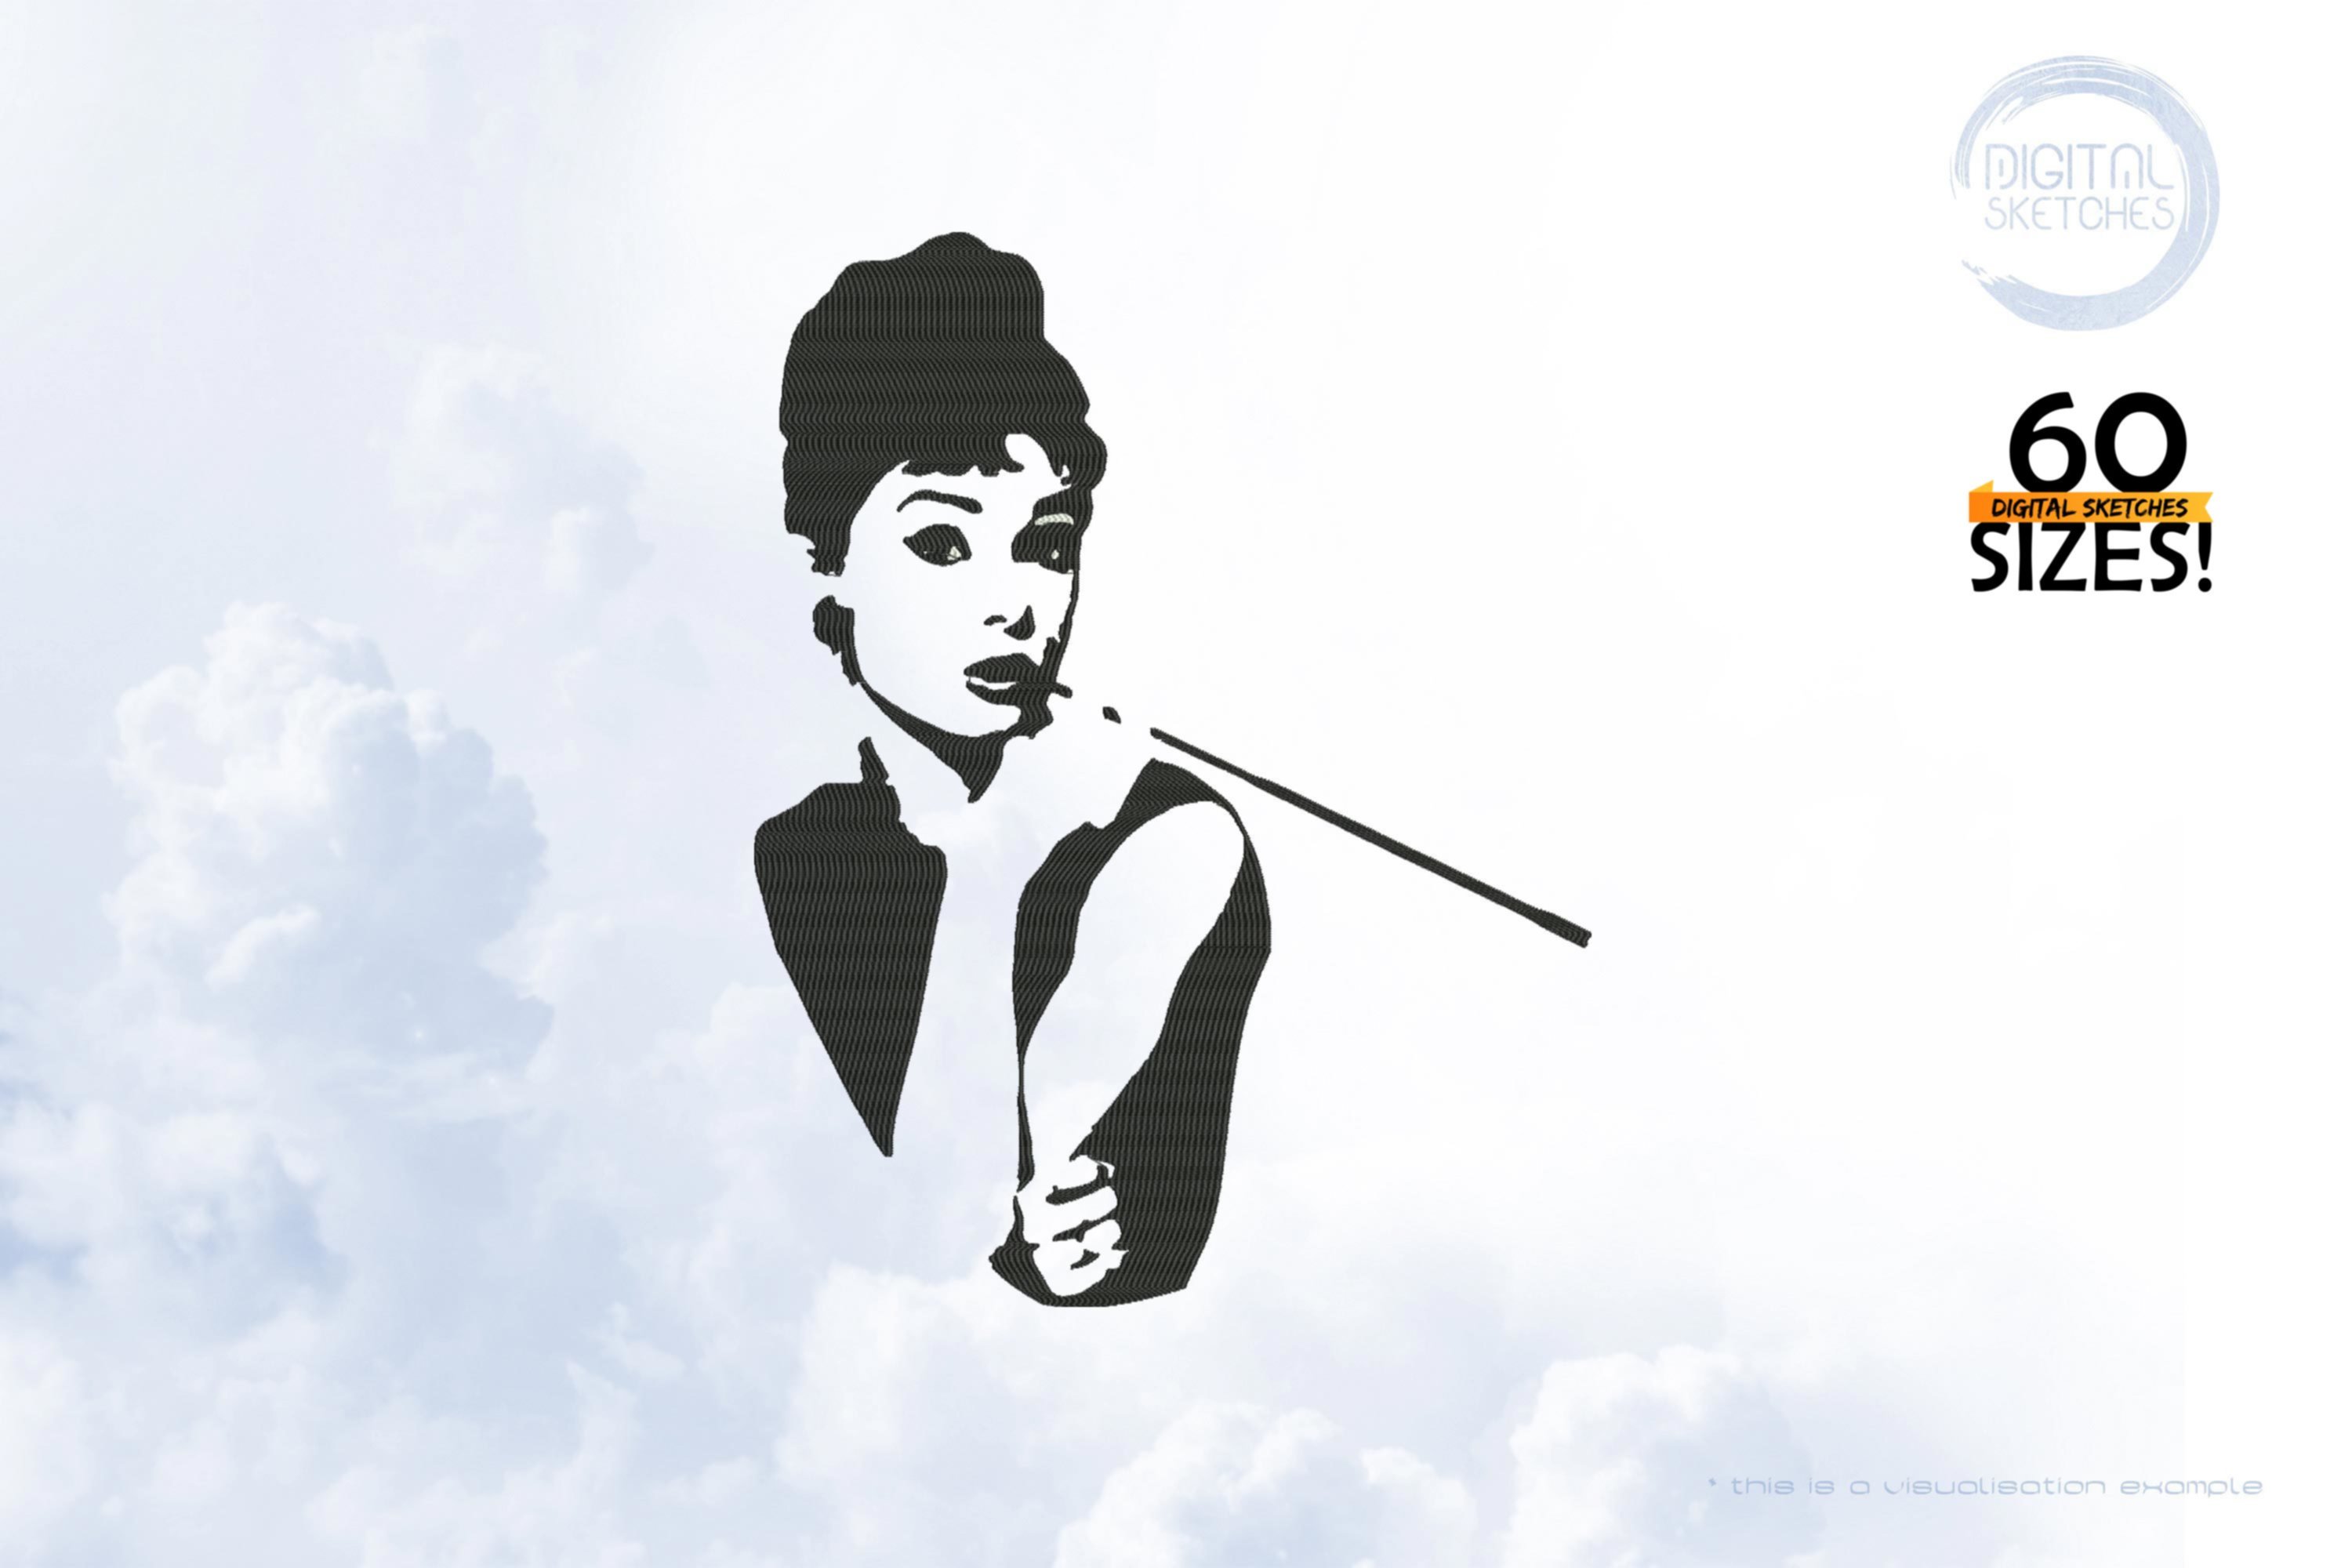 Tribute To Actress Audrey Kathleen Ruston aka Audrey Hepburn I